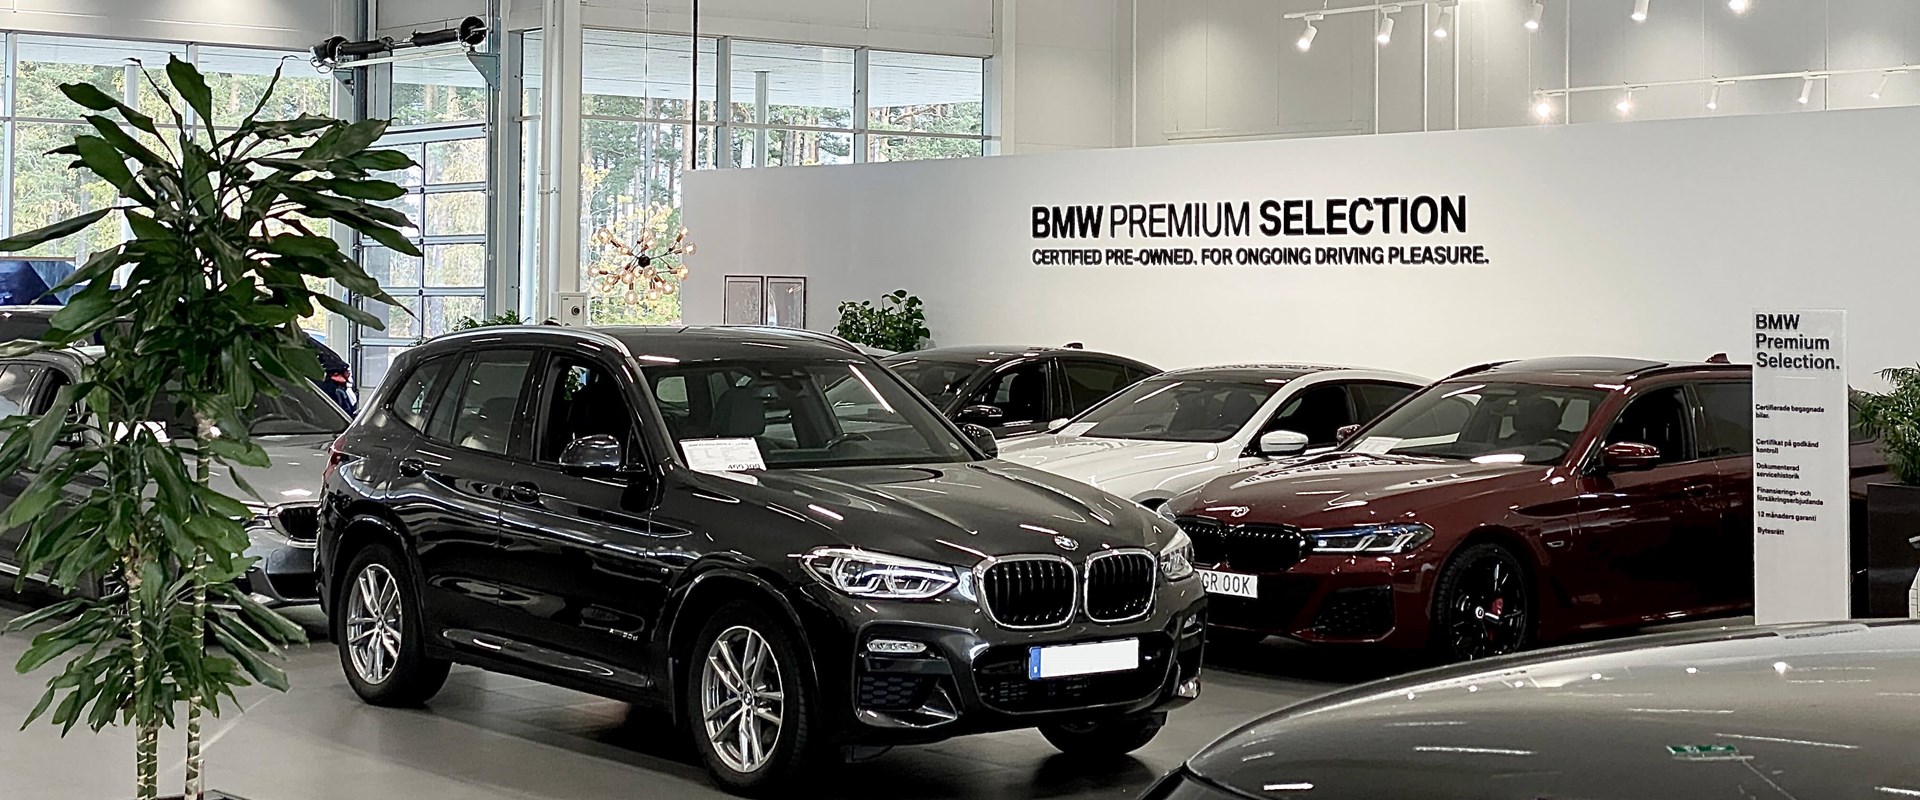 BMW premium selection - begagnade bmw